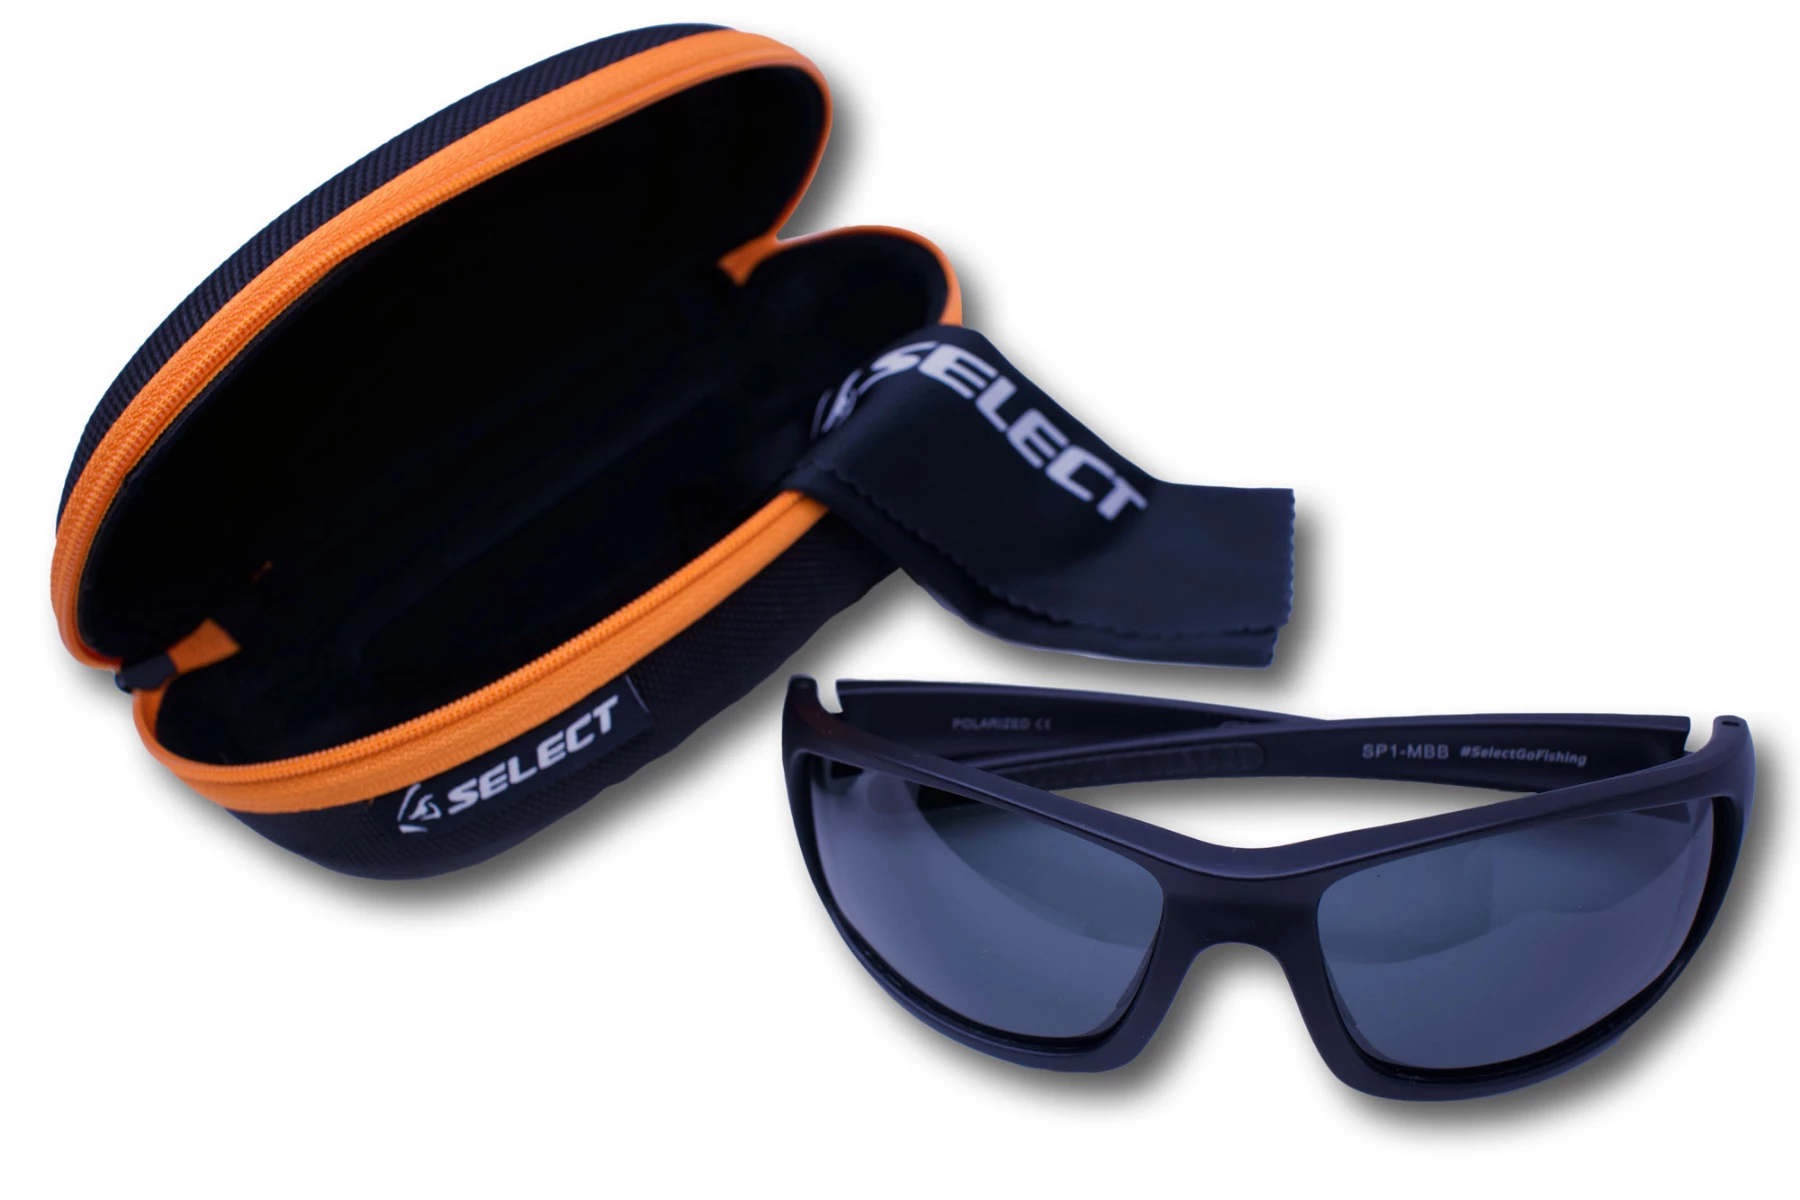 Select Sunglasses SP1-MBB